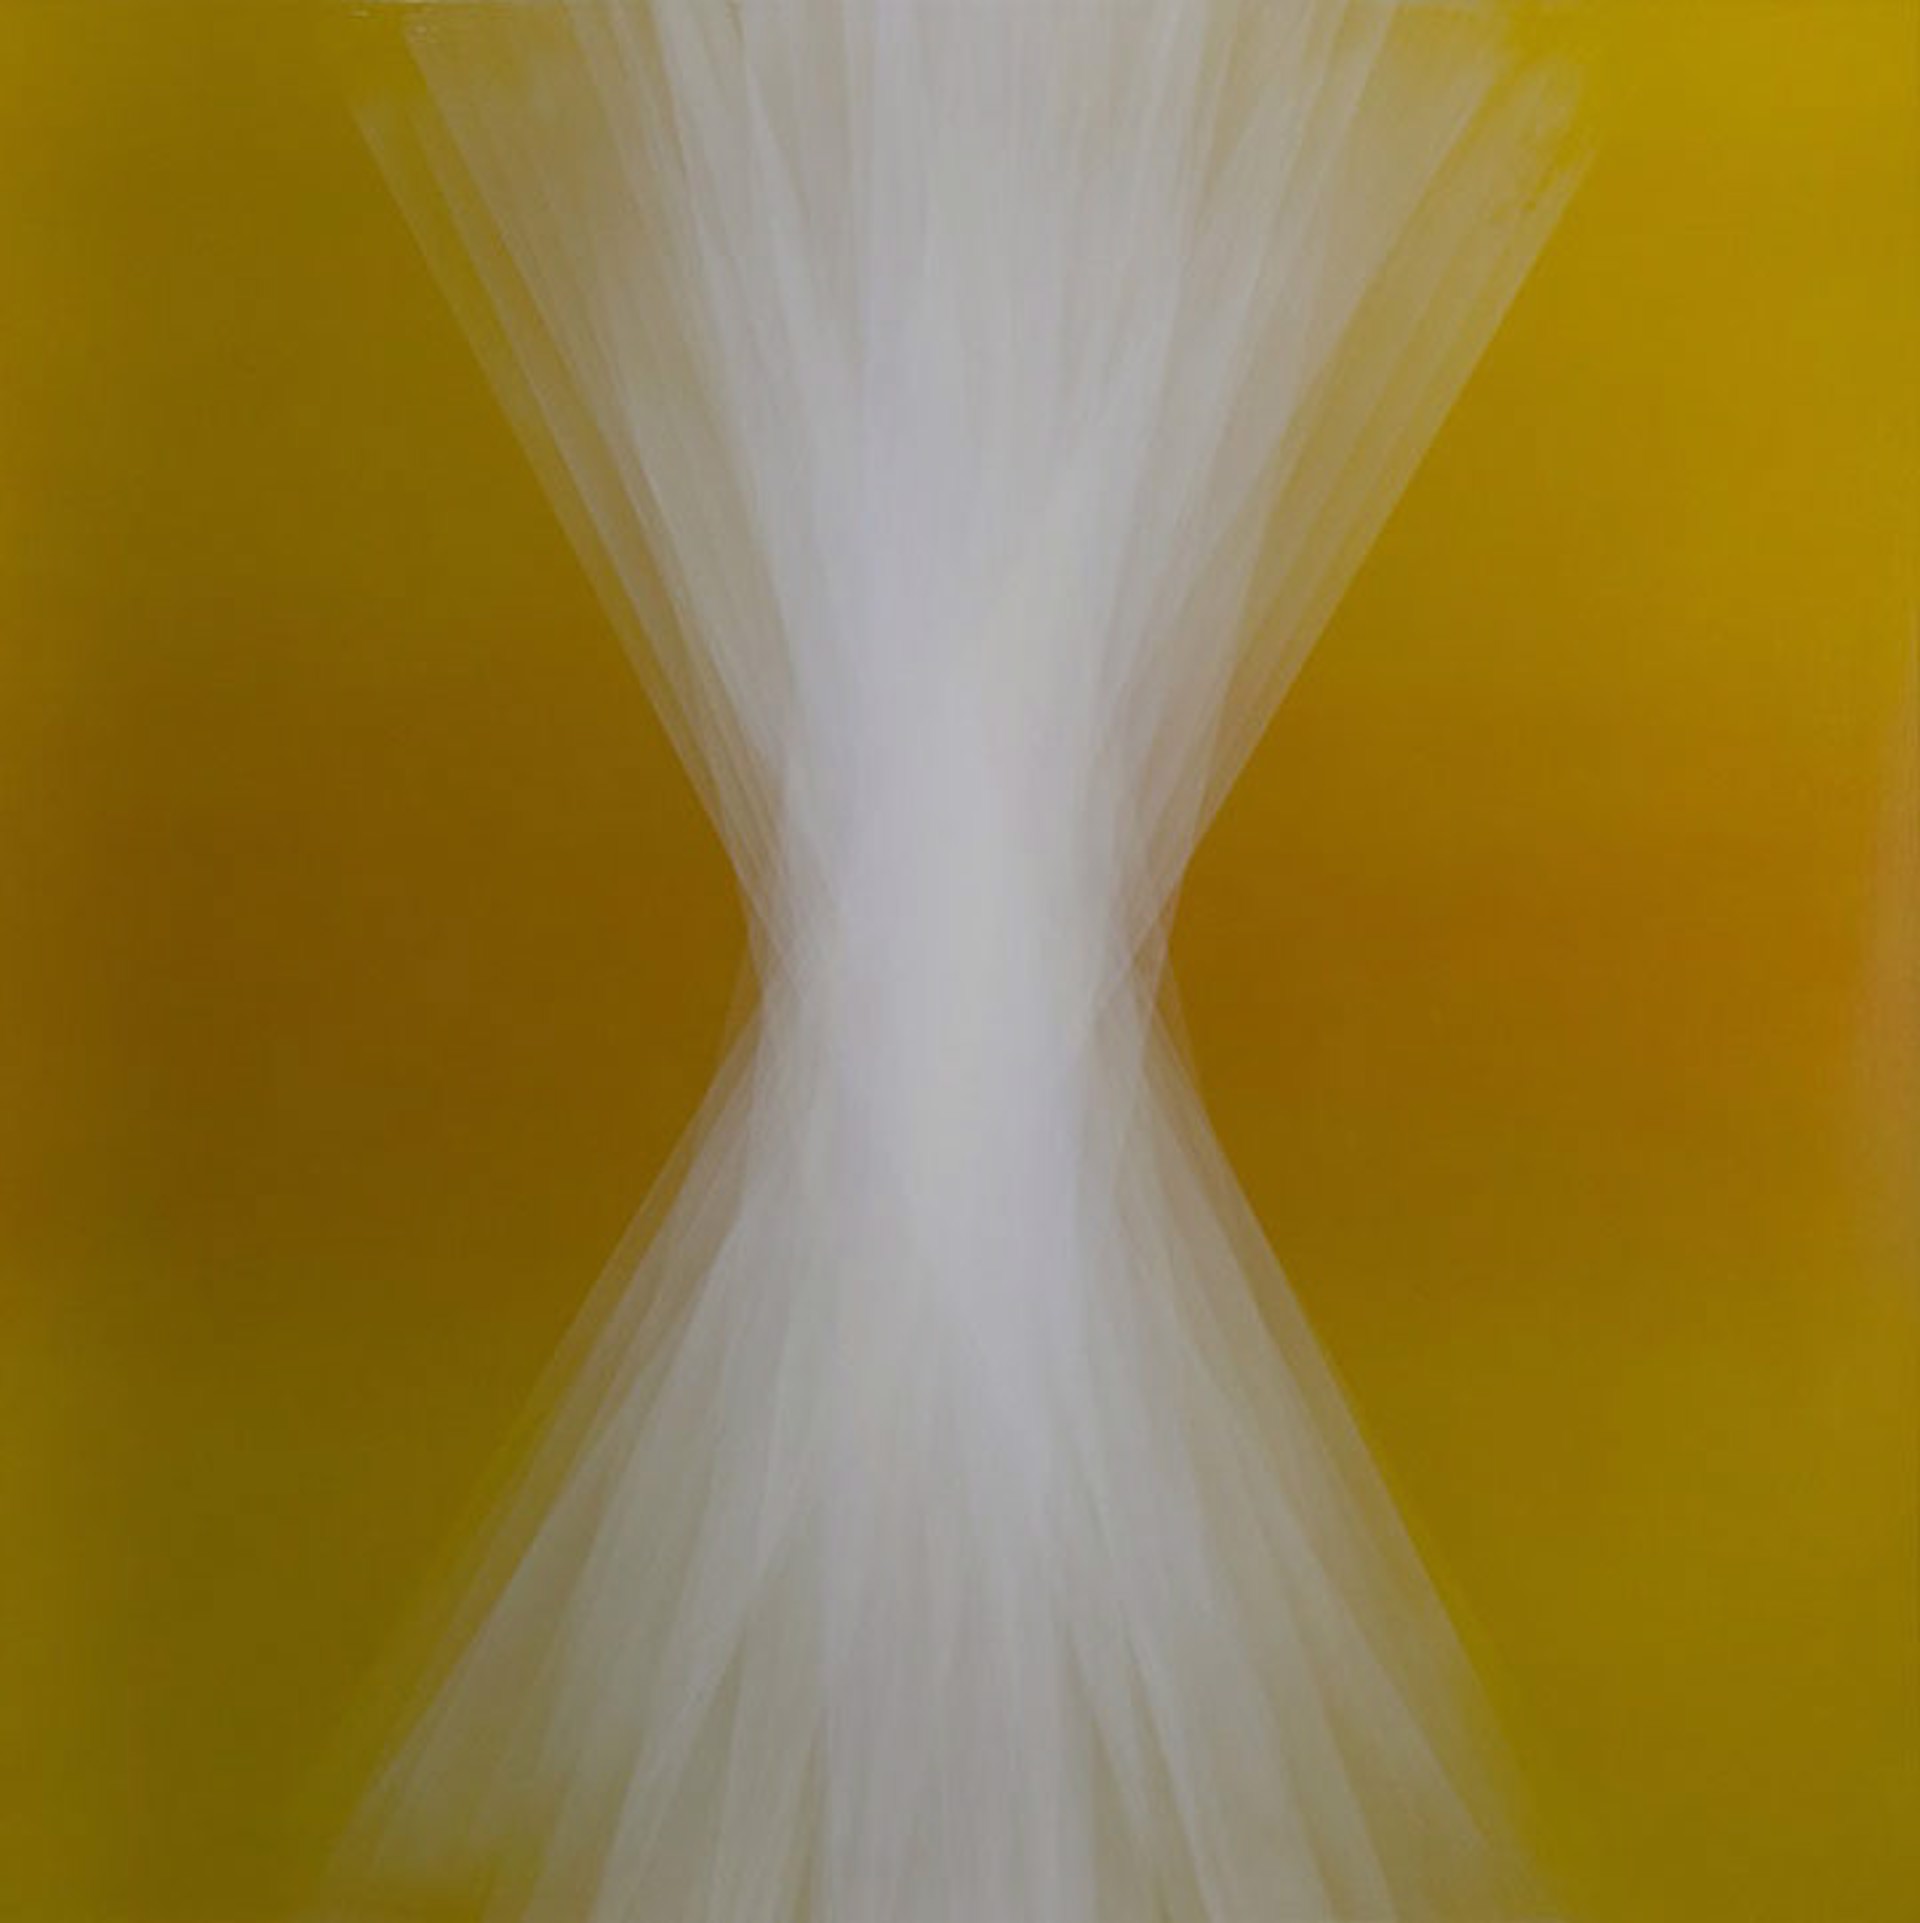 Spaces in Between (Yellow) by Bernadette Jiyong Frank